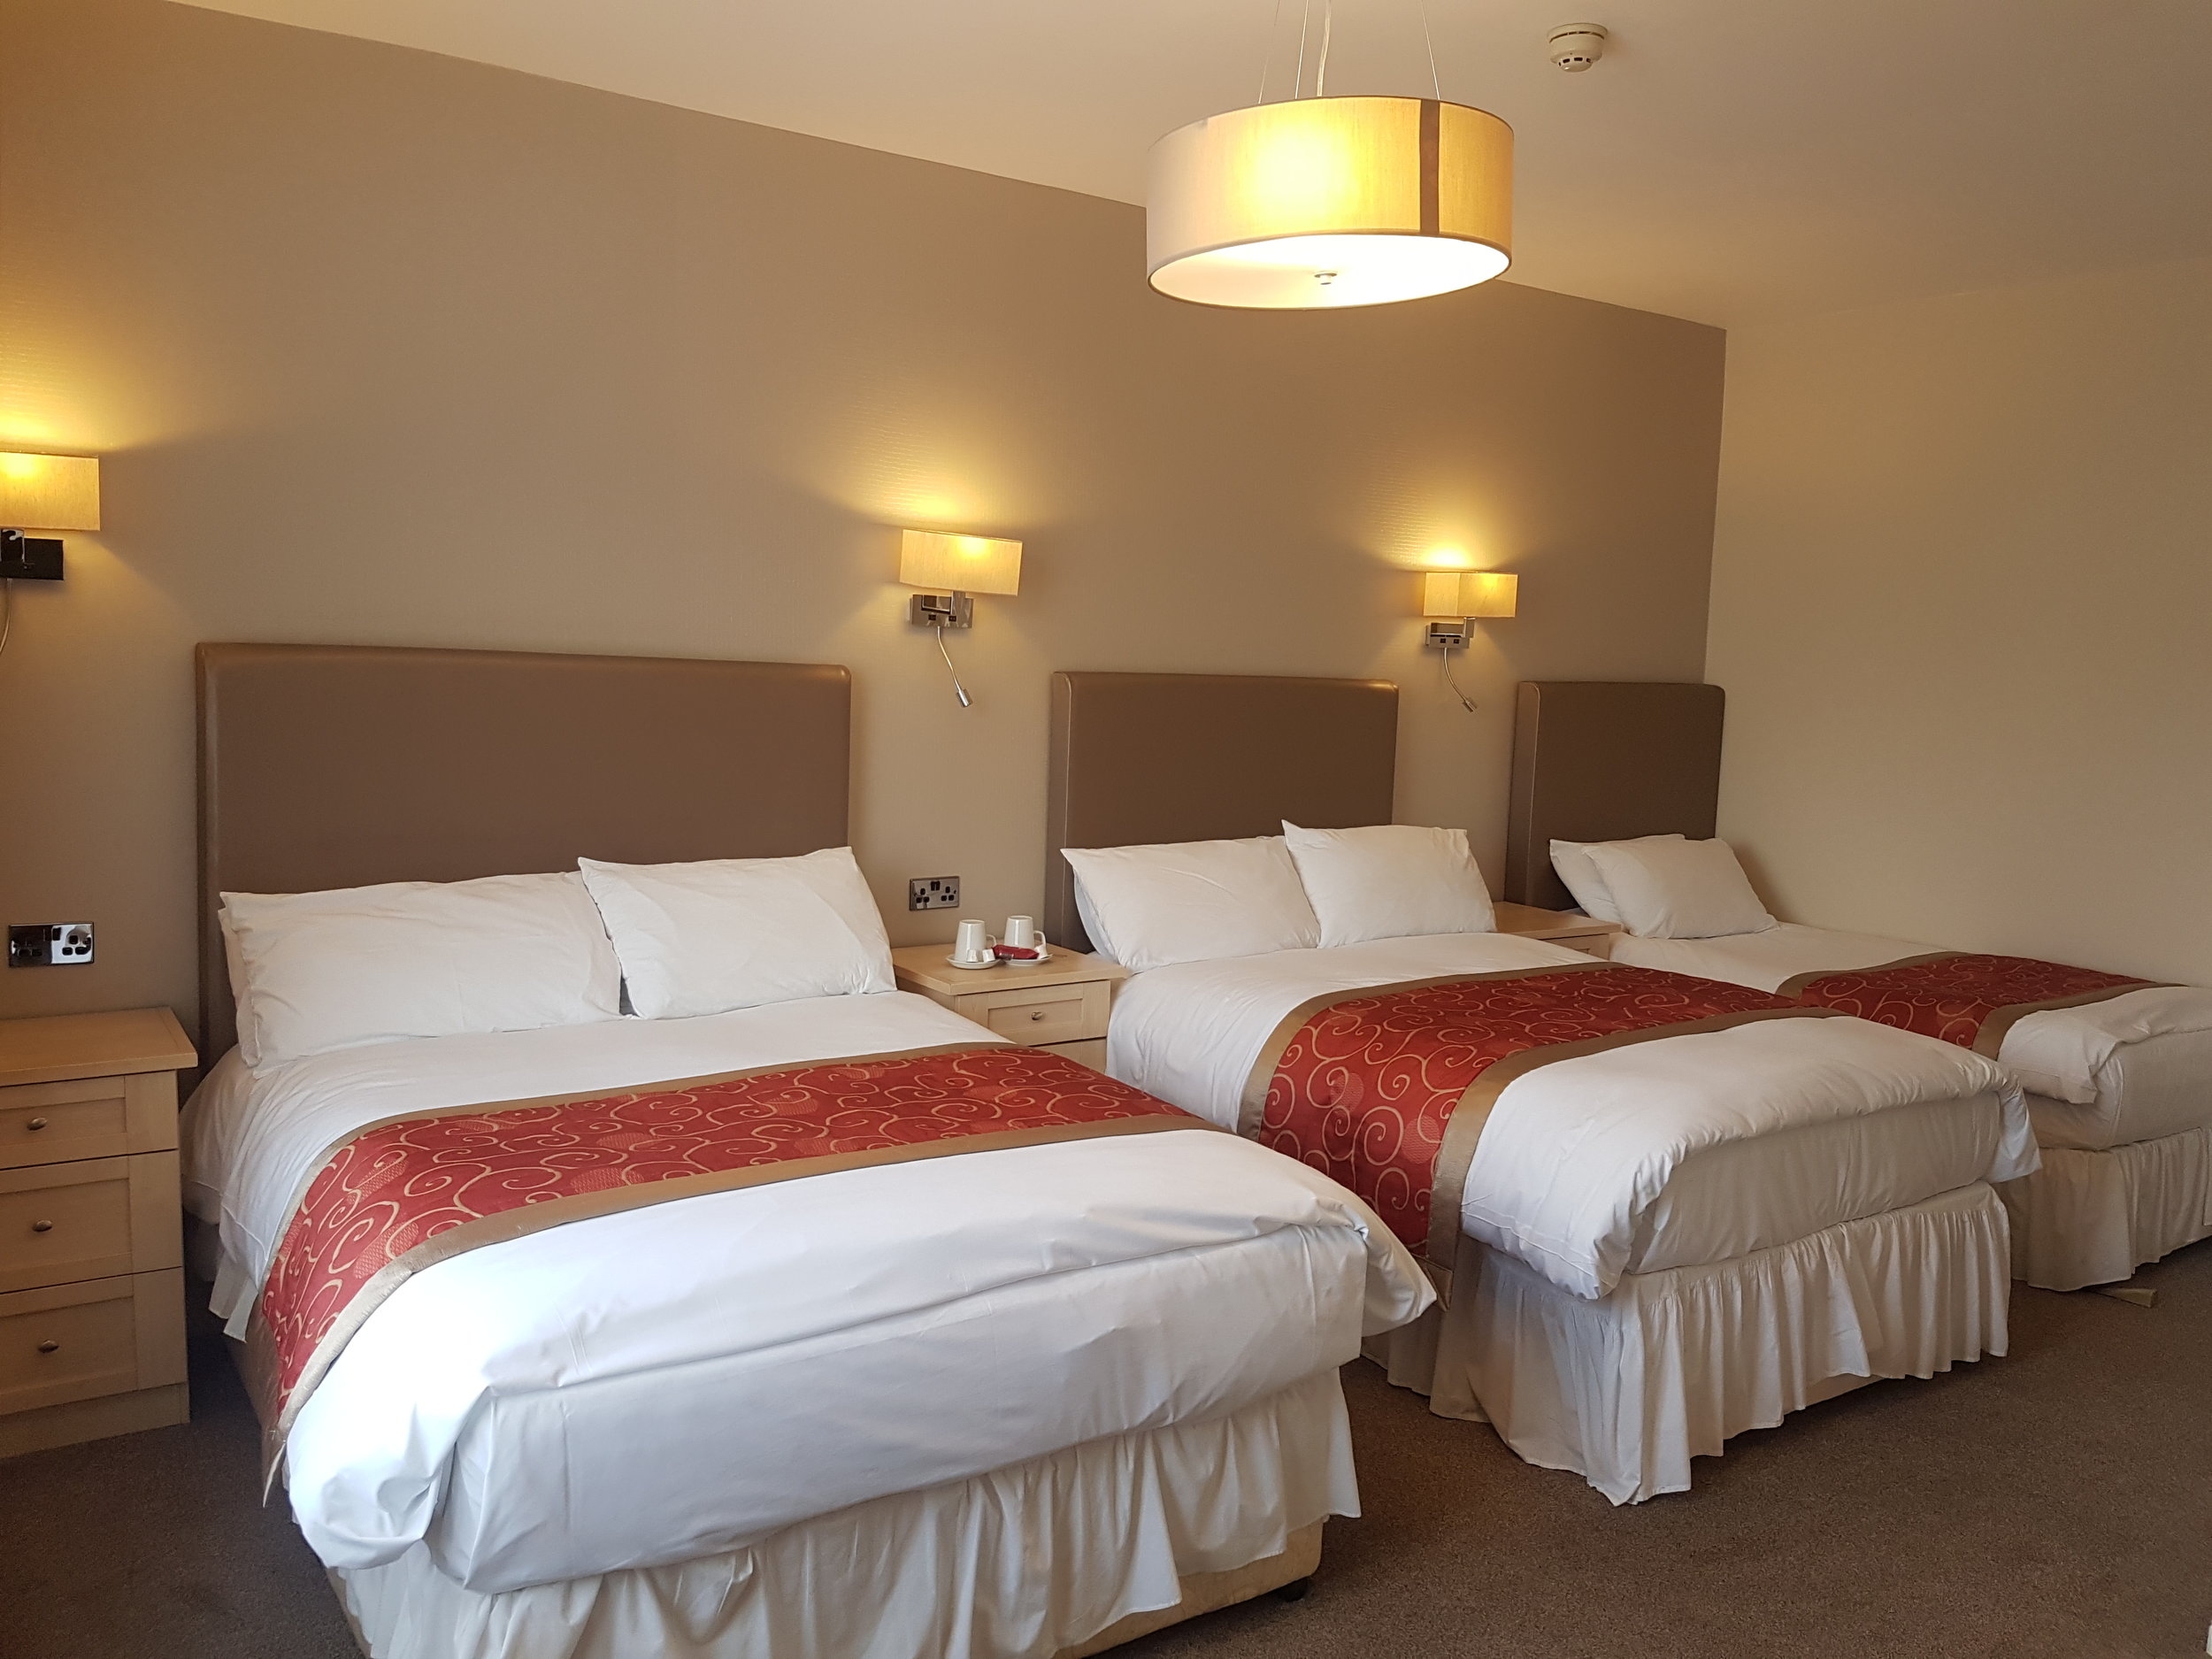 3 bed Family Room (sleeps 4) Victoria Park Lodge Leamington Spa